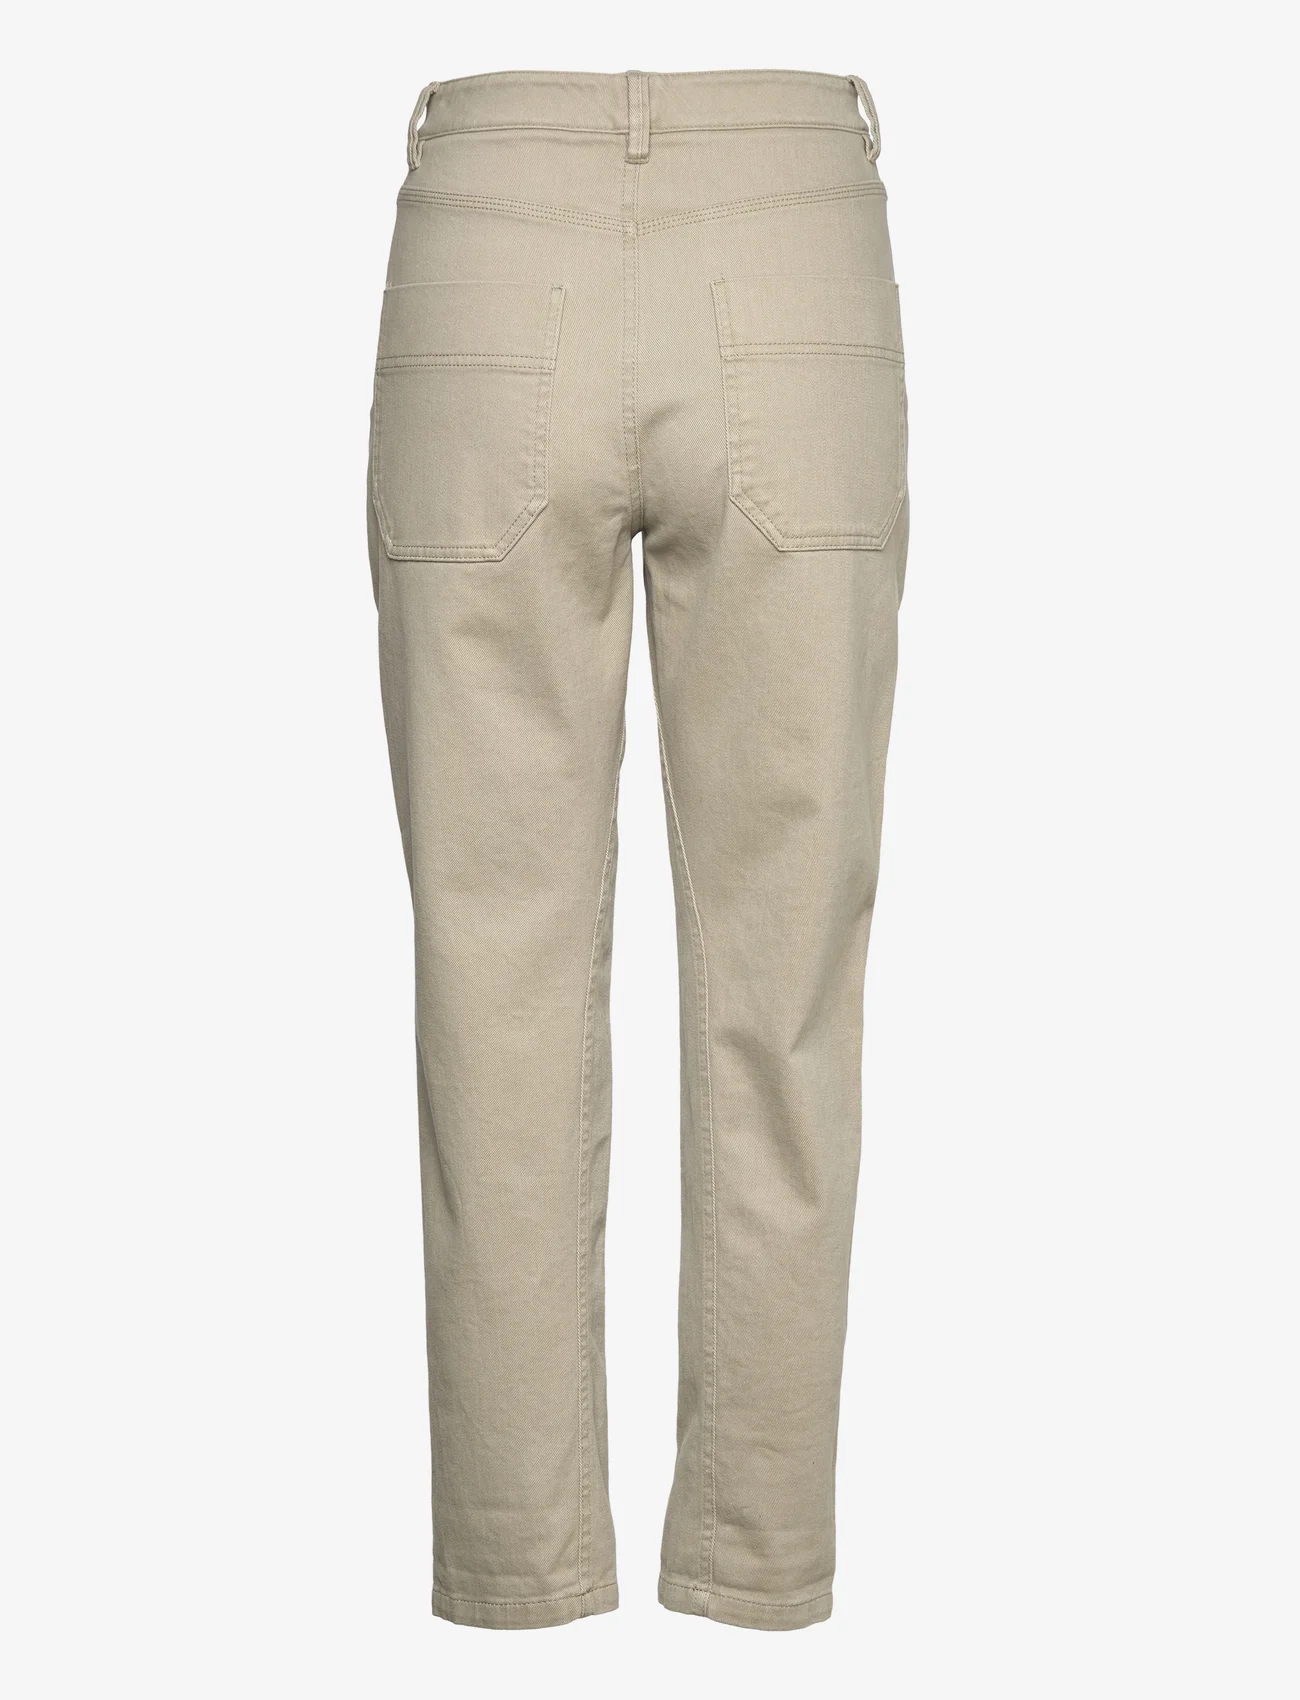 Reiss - ERIN - straight leg trousers - khaki - 1